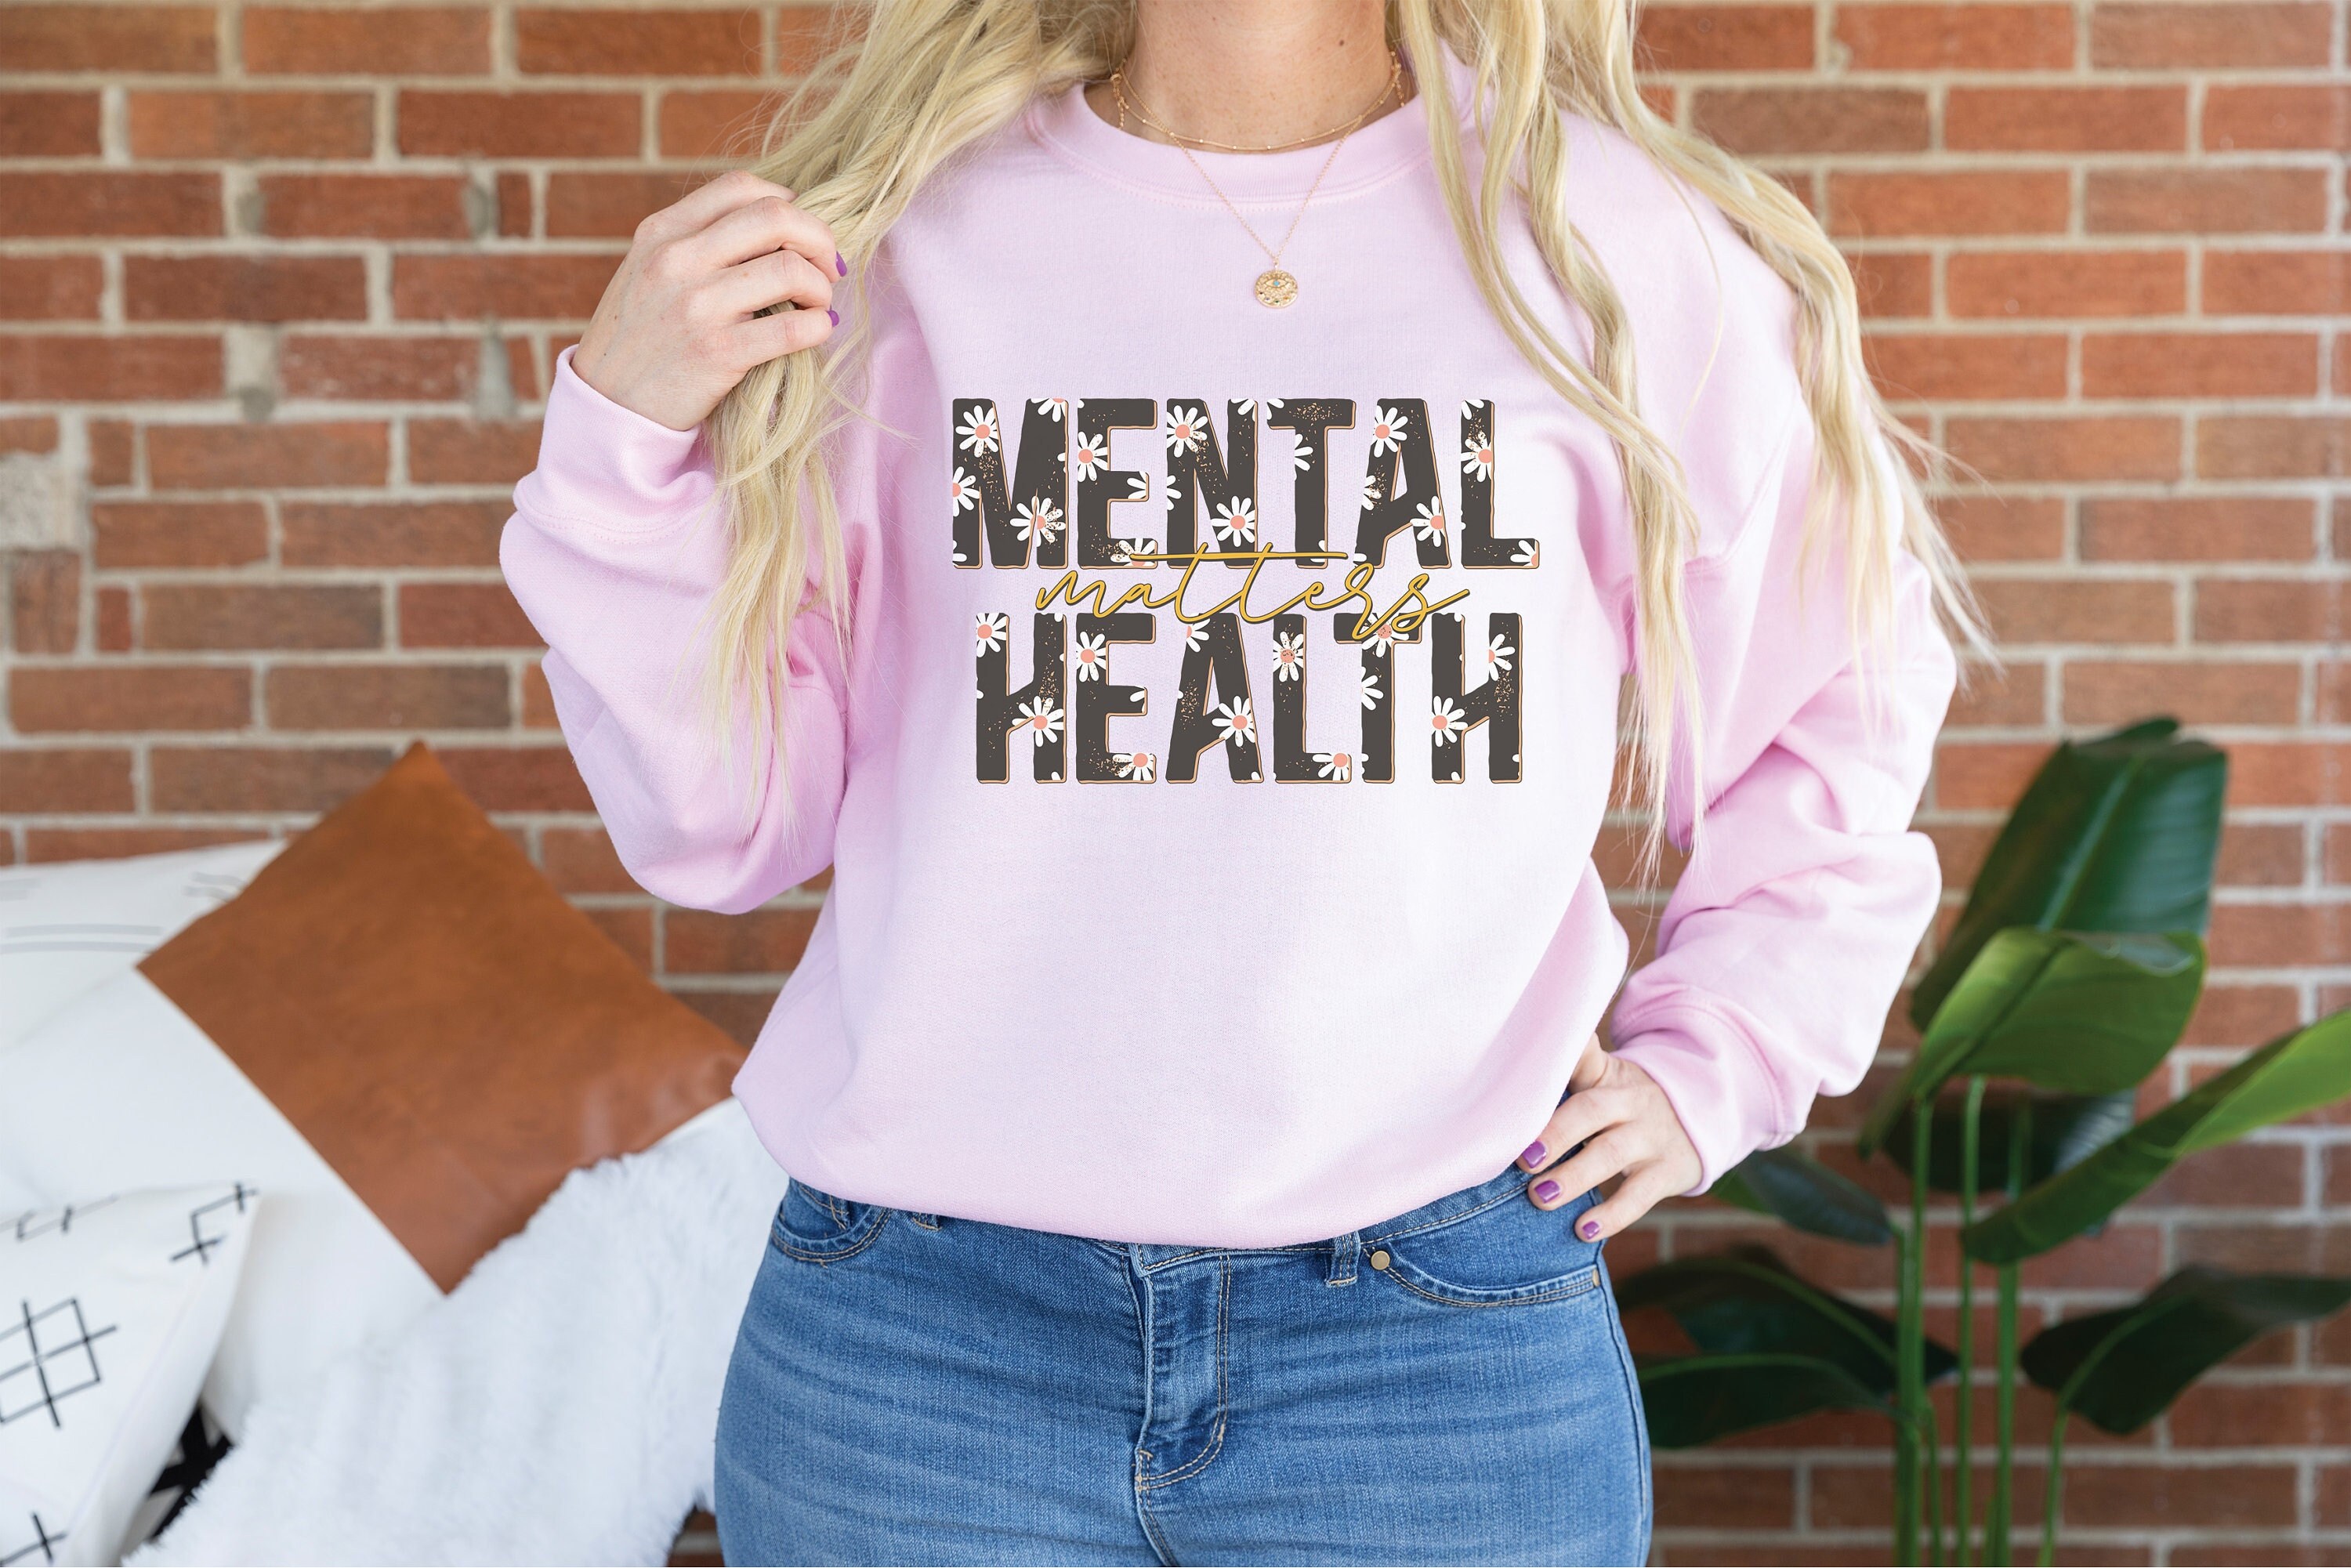 Mental Health Sweatshirt - Etsy